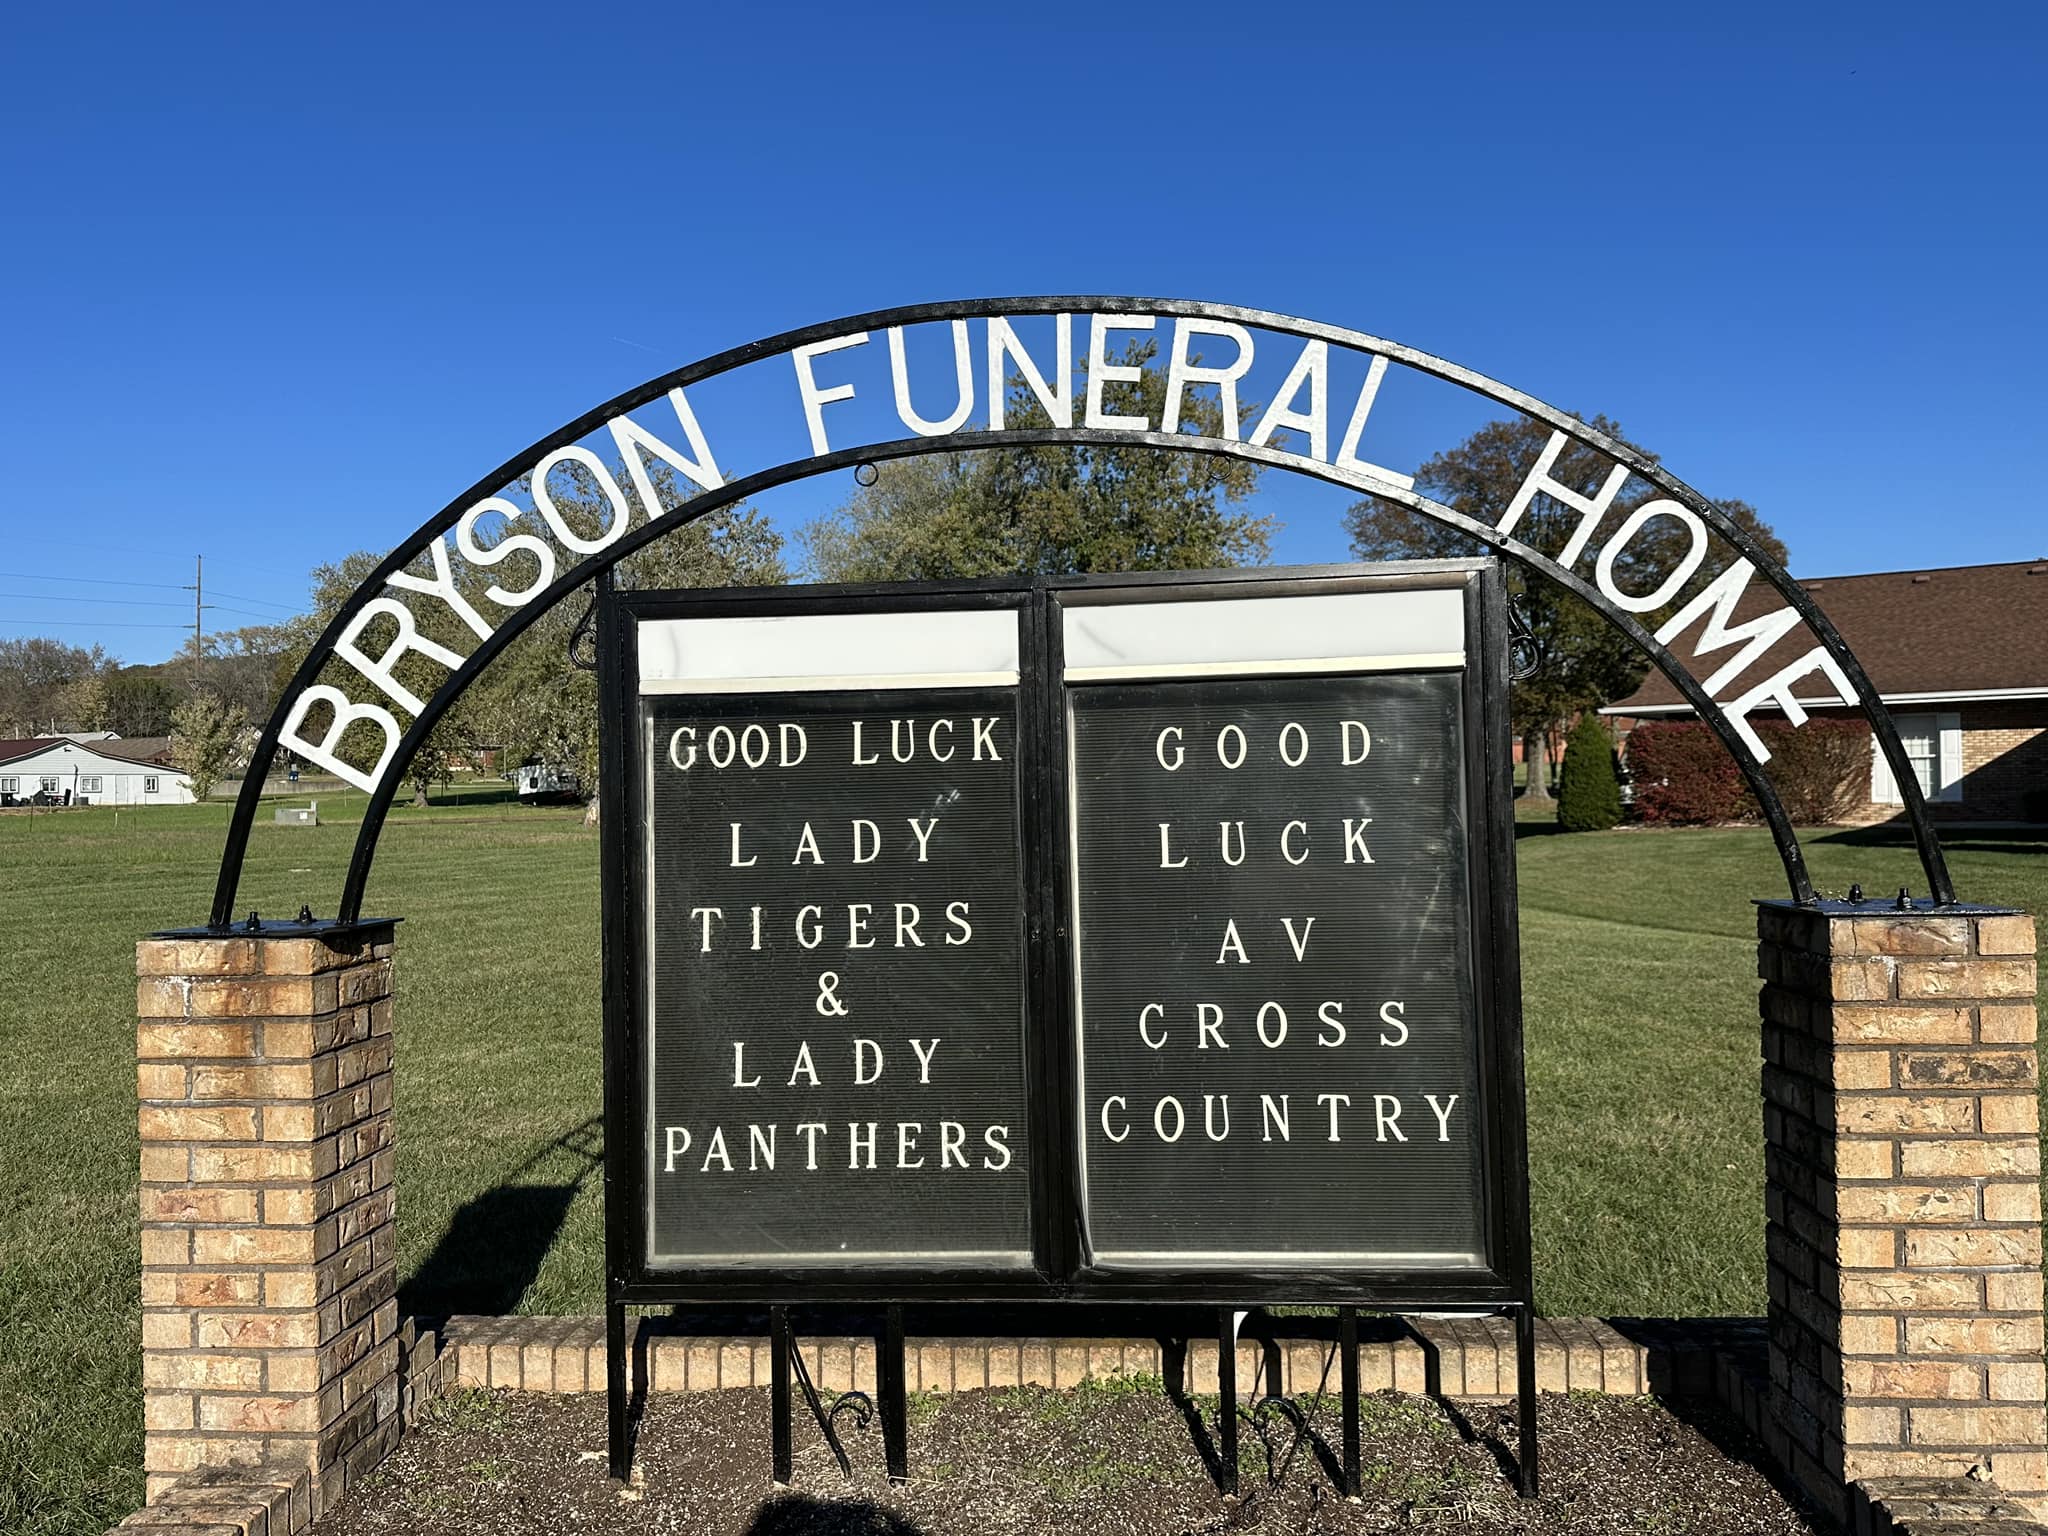 Bryson Funeral Home 312 S Valle St, Pilot Knob Missouri 63663